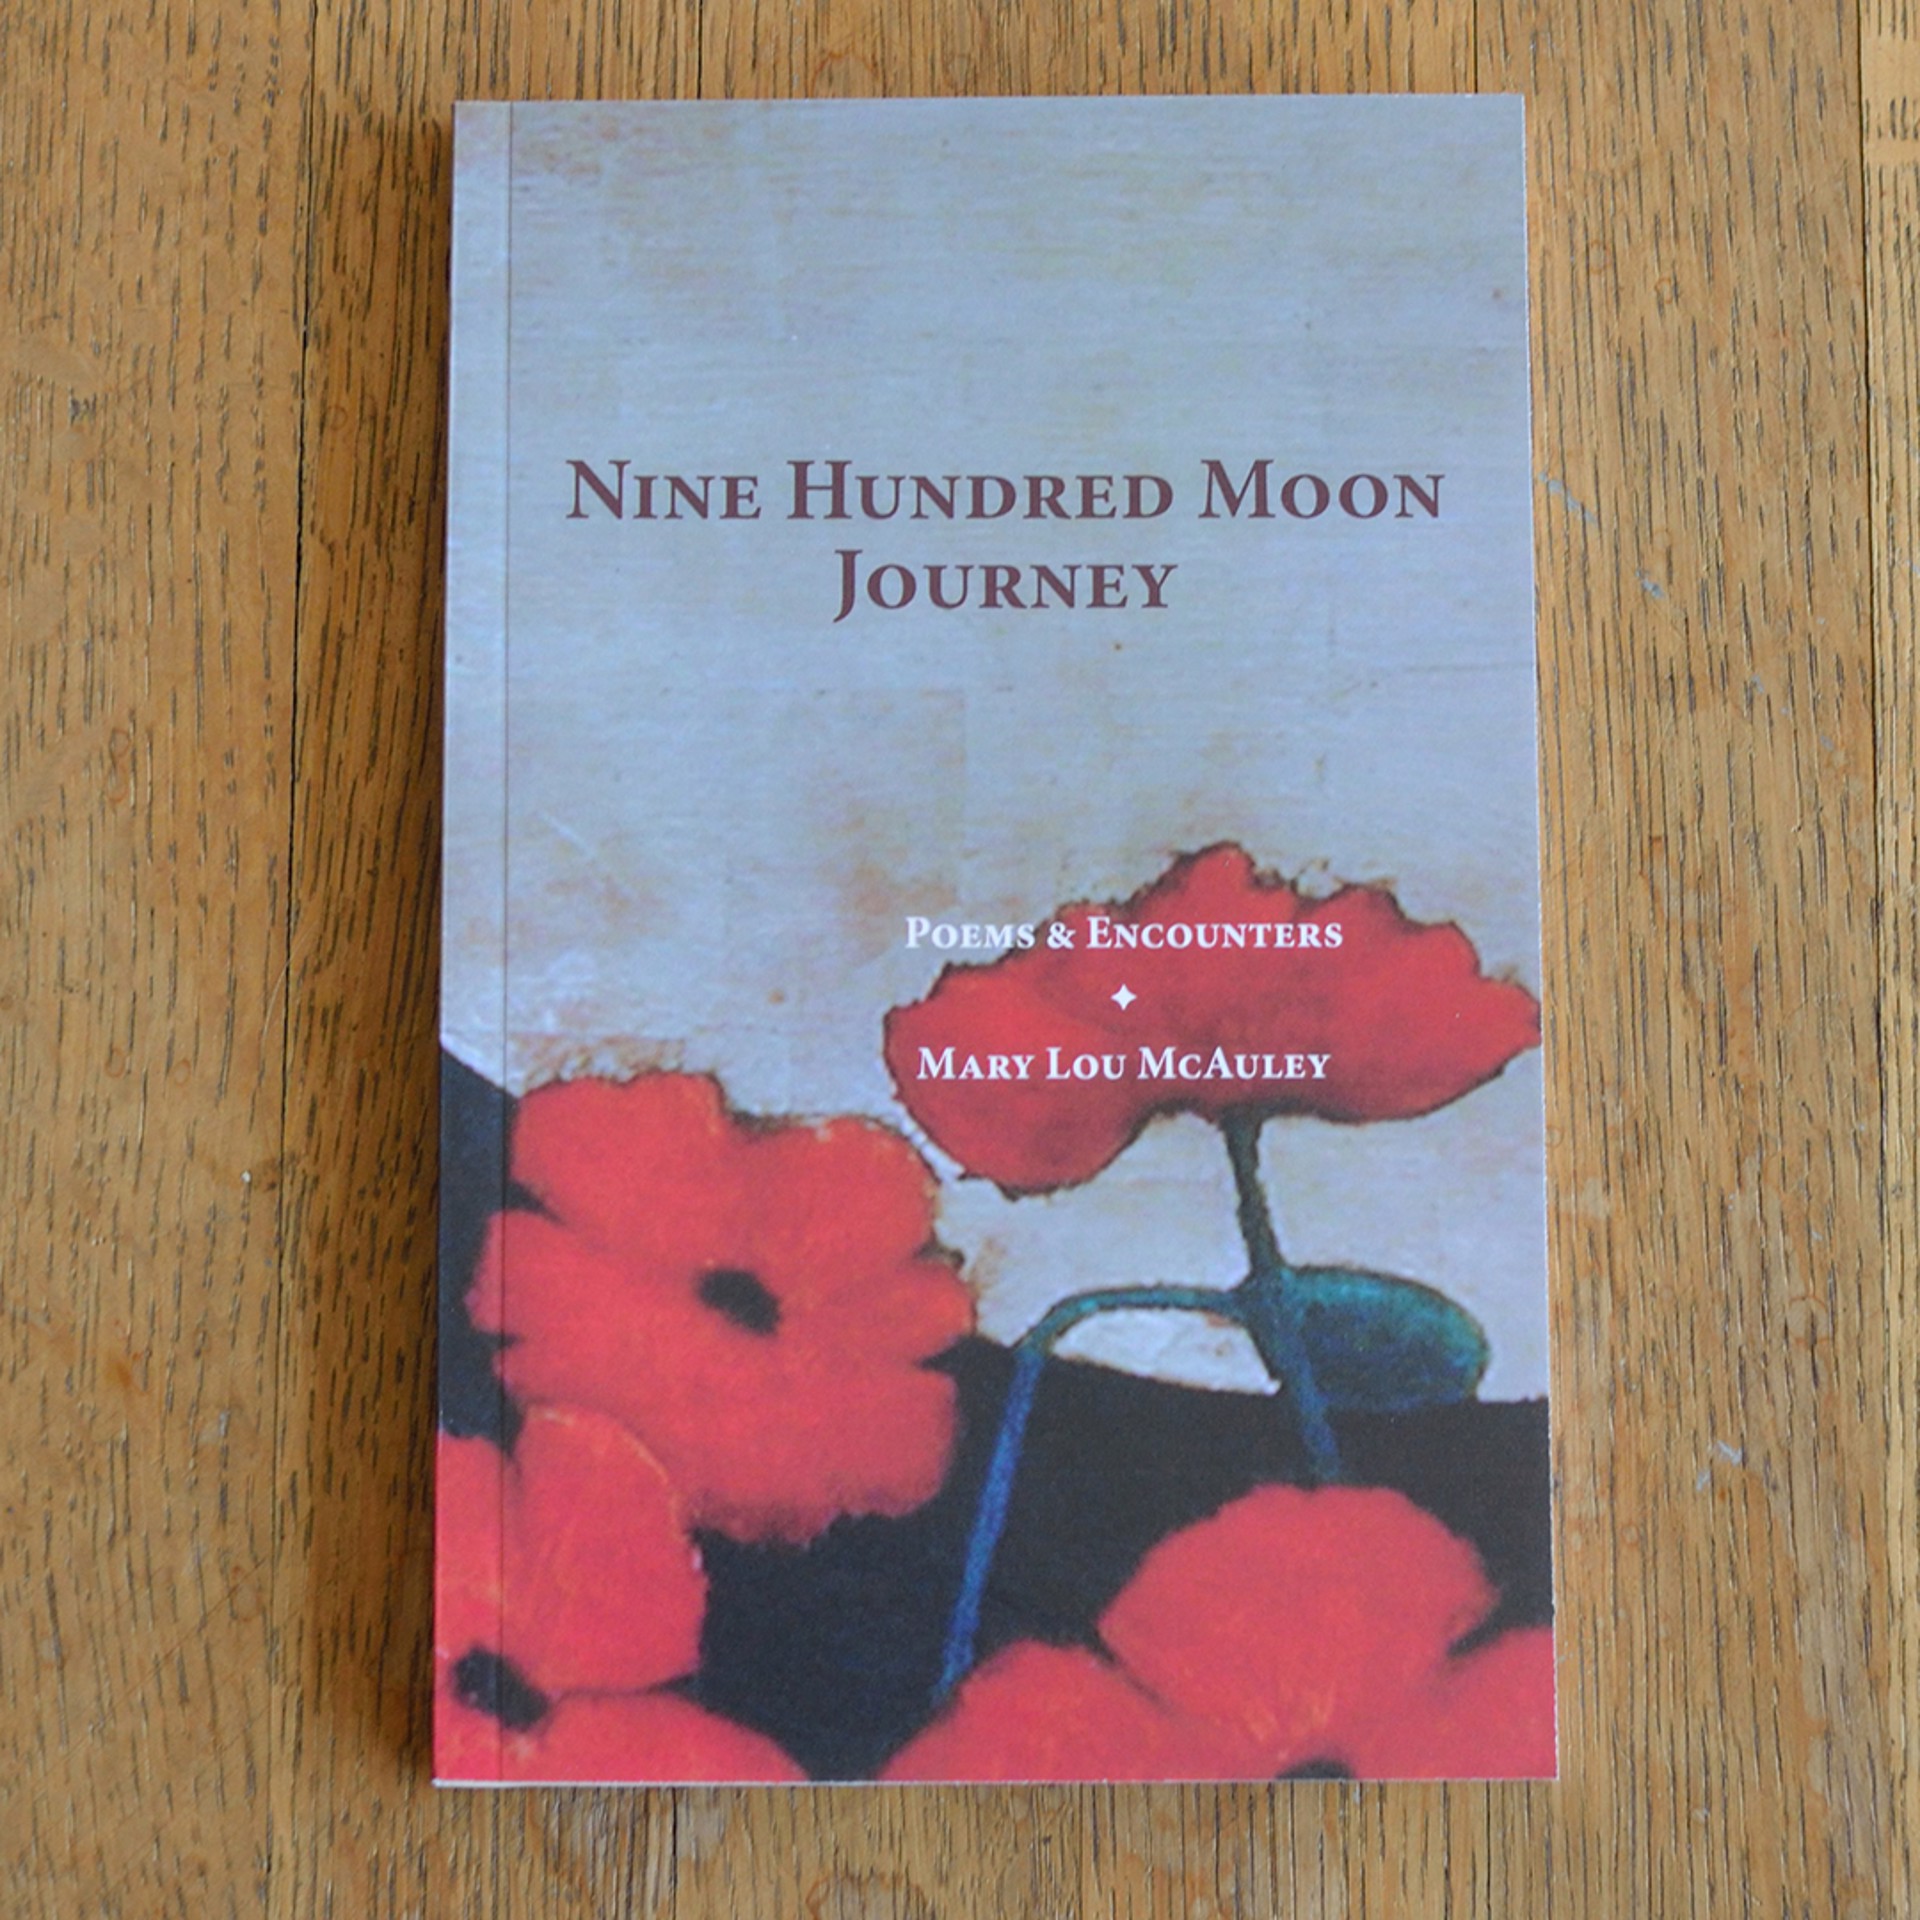 Nine Hundred Moon Journey by Mary Lou McAuley